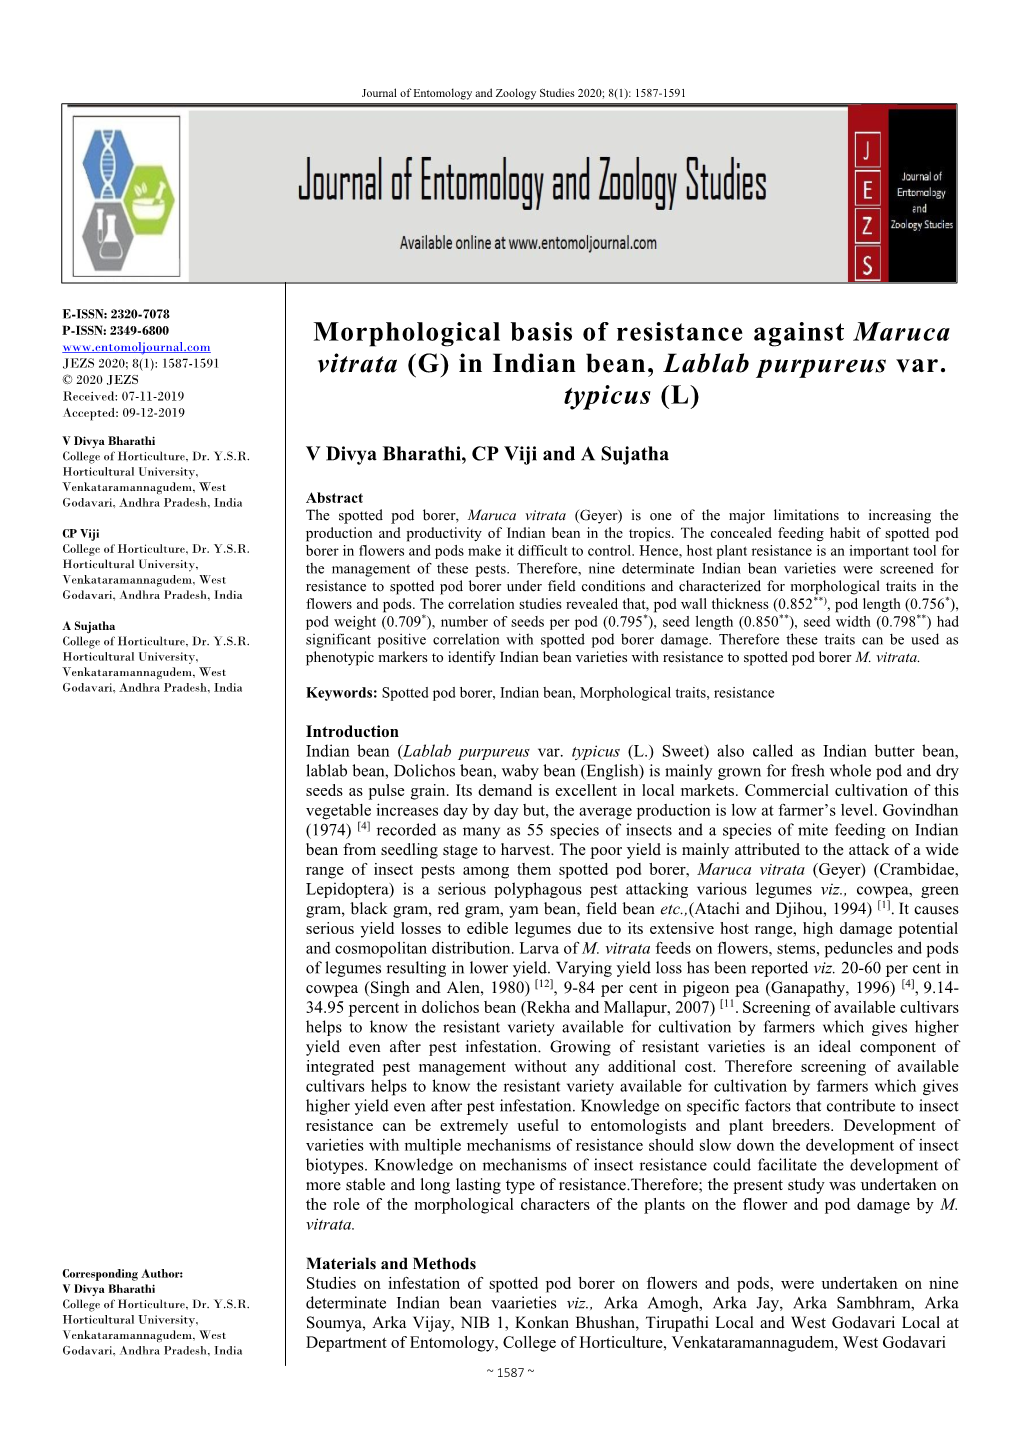 Morphological Basis of Resistance Against Maruca Vitrata